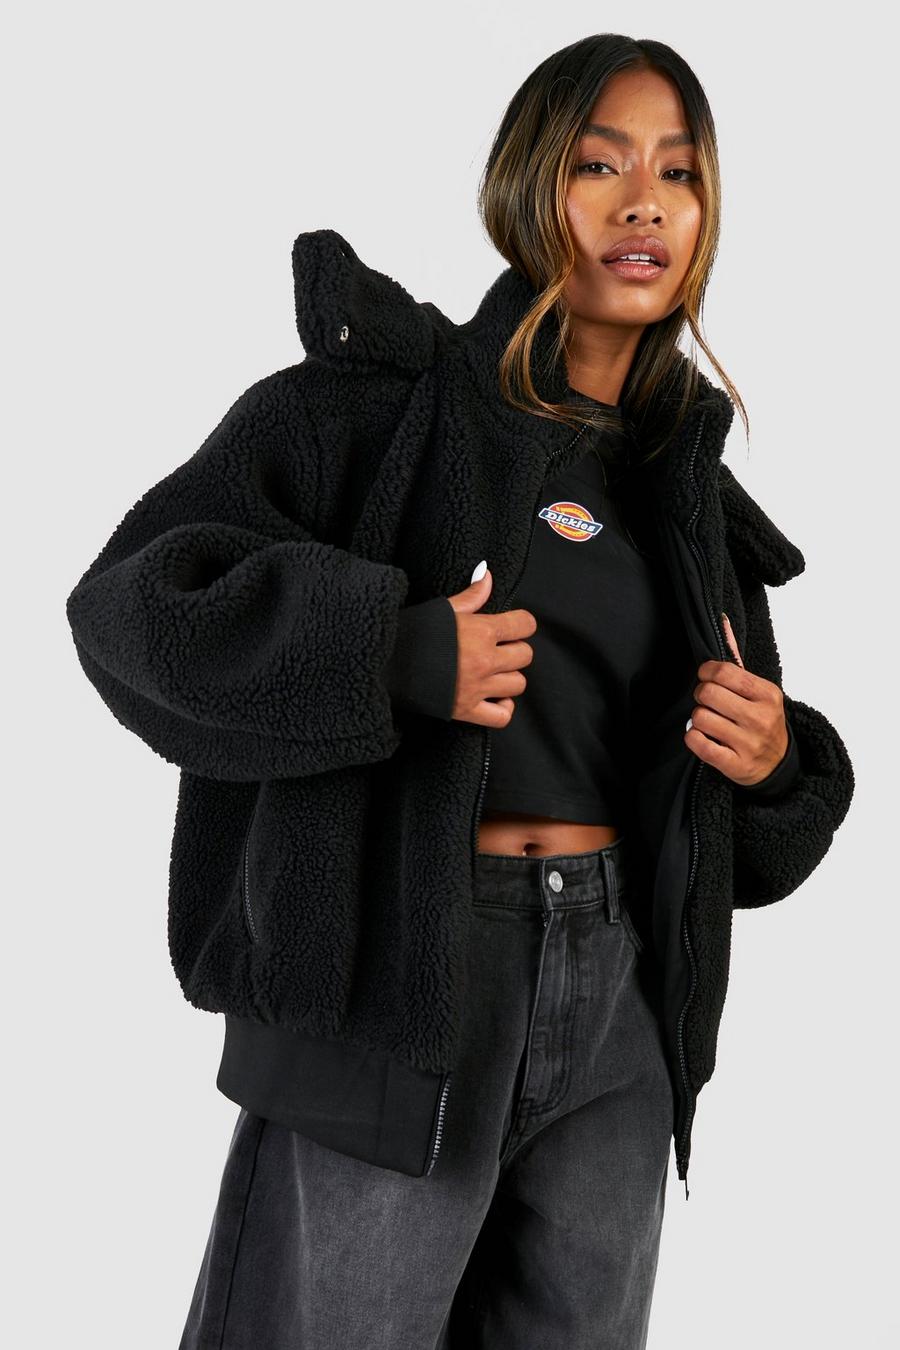 Womens Winter Coats Faux Fur Lining Parka With Fur Hood